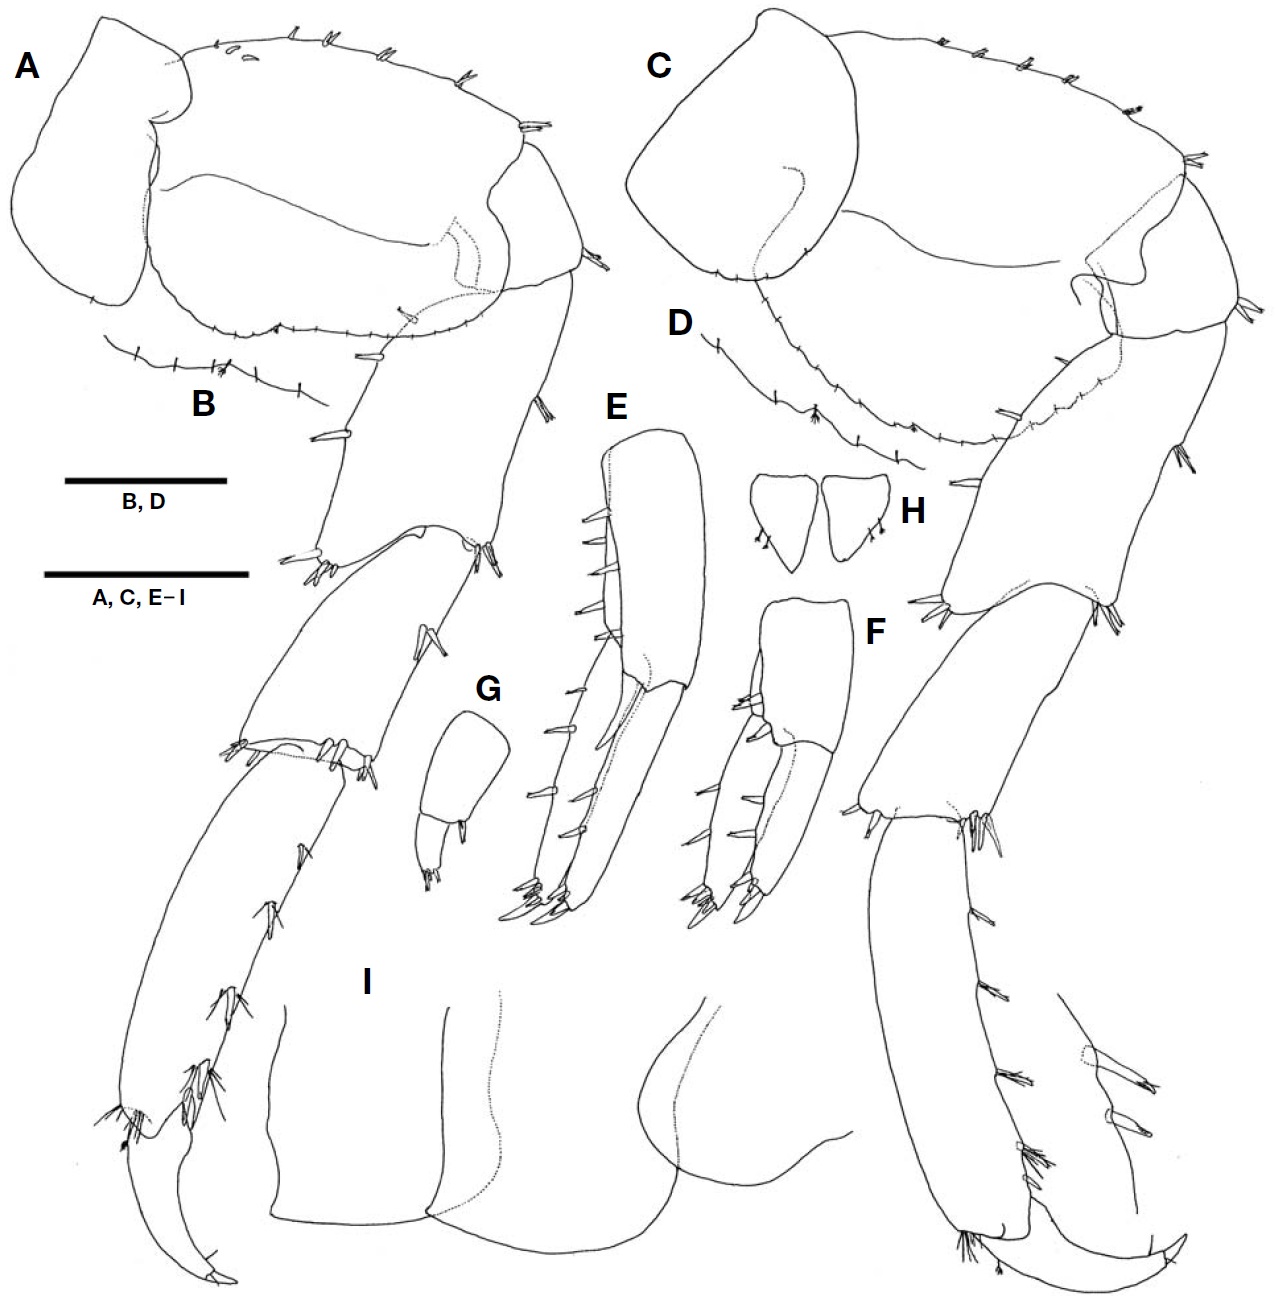 Protohyale (Boreohyale) triangulata (Hiwatari, 2003), male. A, Pereopod 6; B, Notch and surge seta of pereopod 6; C, Pereopod 7; D, Notch and surge seta of pereopod 7; E, Uropod 1; F, Uropod 2; G, Uropod 3; H, Telson; I, Pleonal epimera. Scale bars: A, C, E-I=0.5 mm, B, D=0.2 mm.